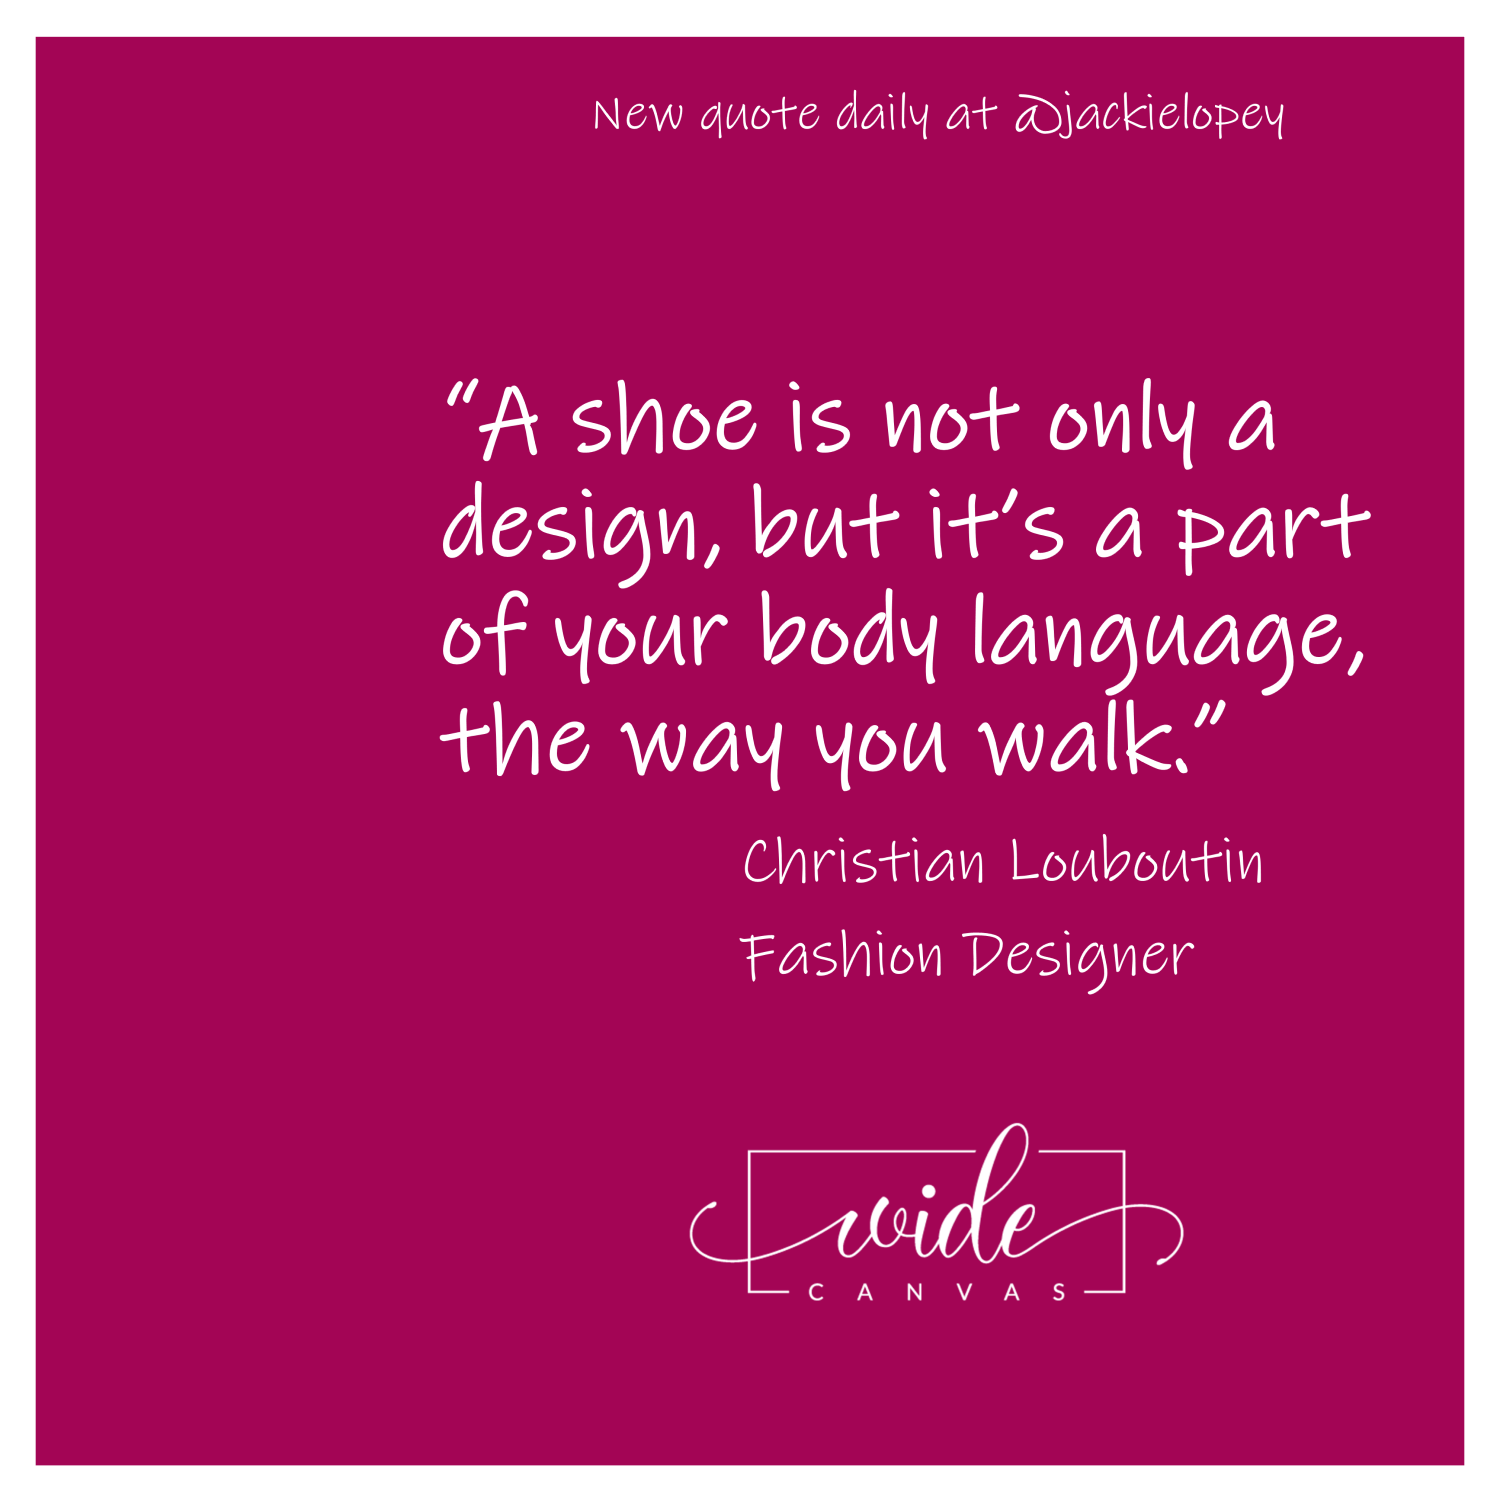 “A shoe is not only a design, but it’s a part of your body language, the way you walk.” Christian Louboutin Fashion Designer